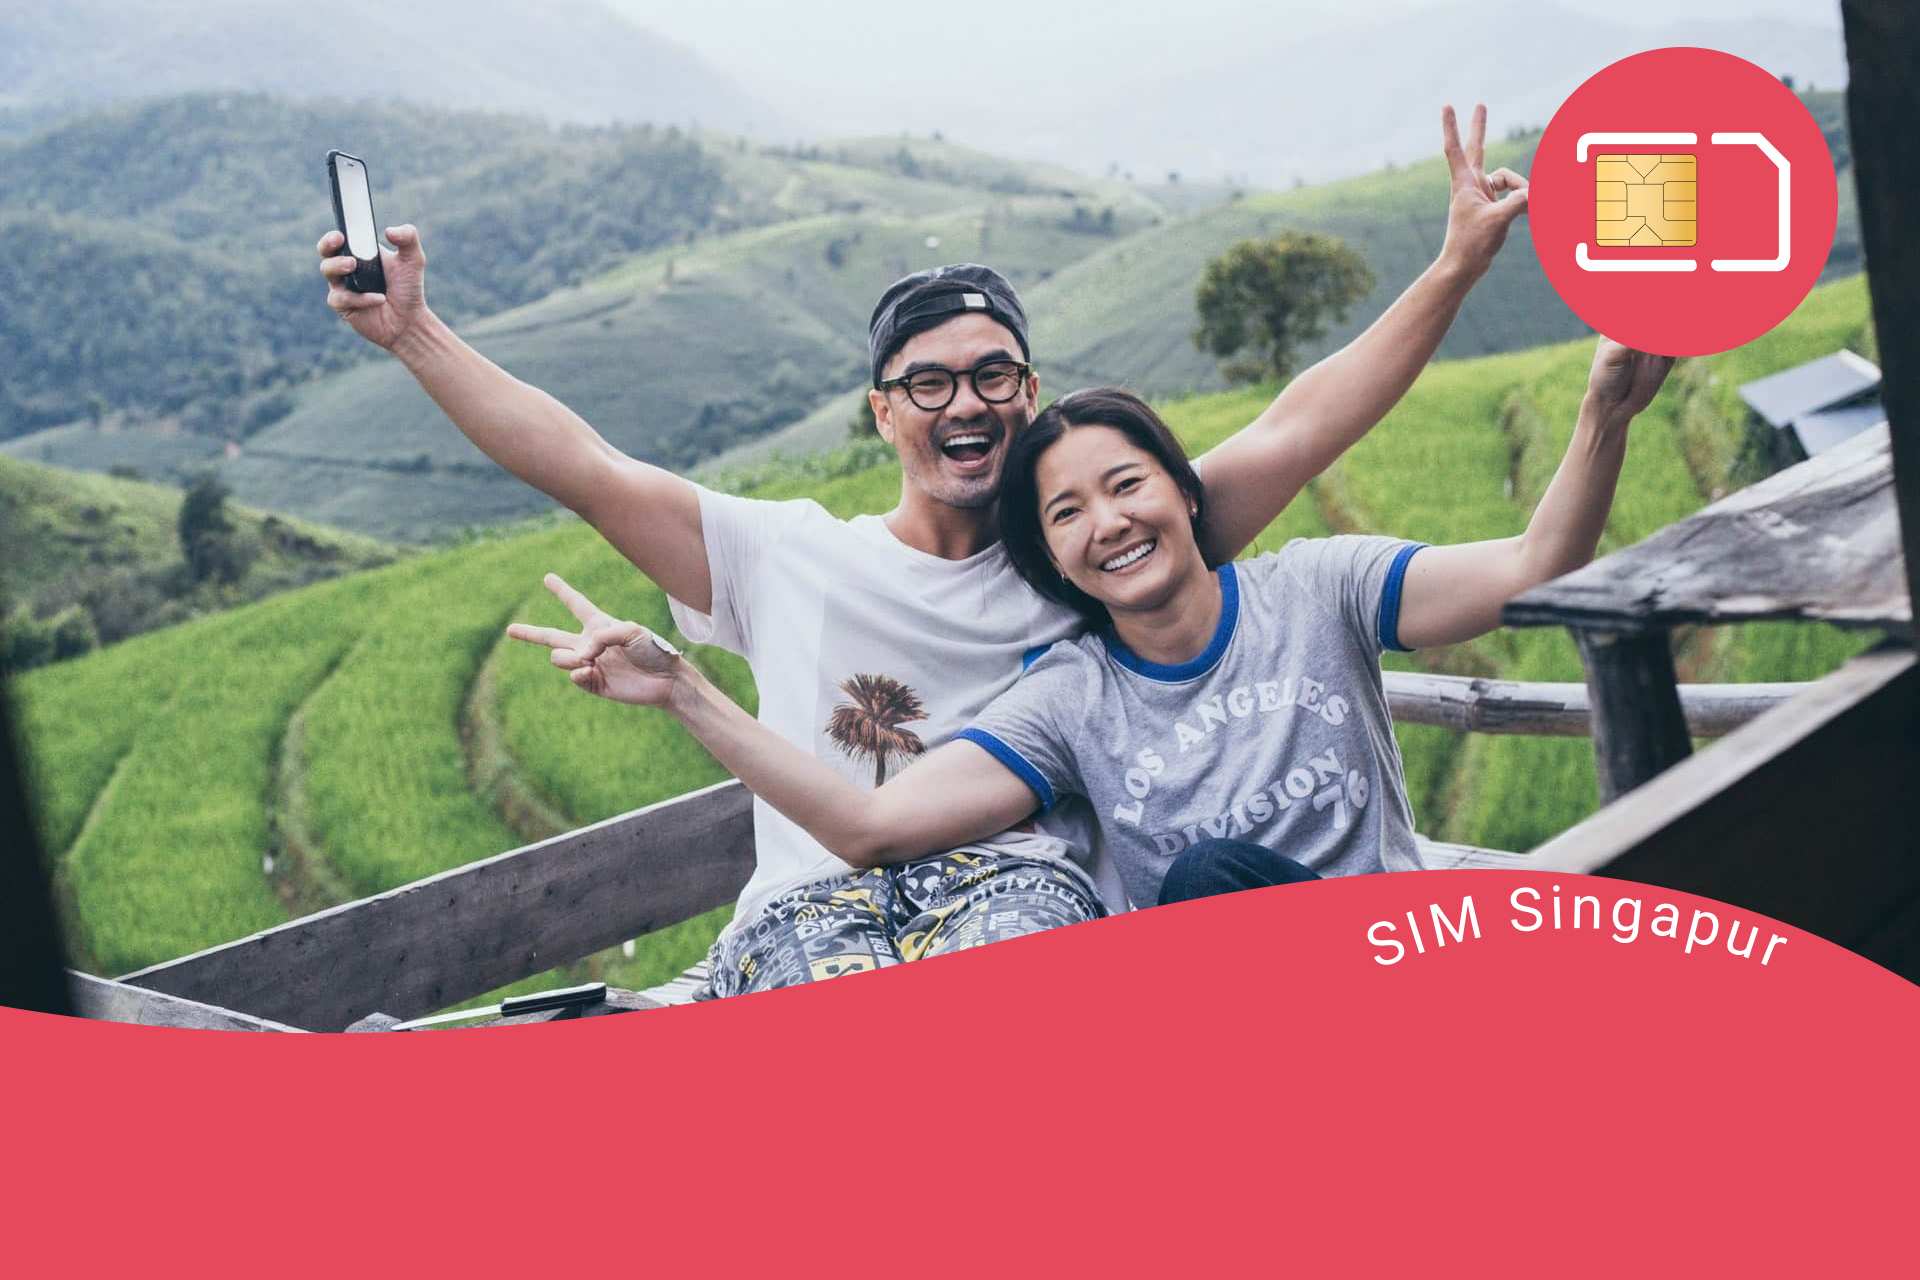 Lleva tu SIM para Singapur para ser un nómada digital